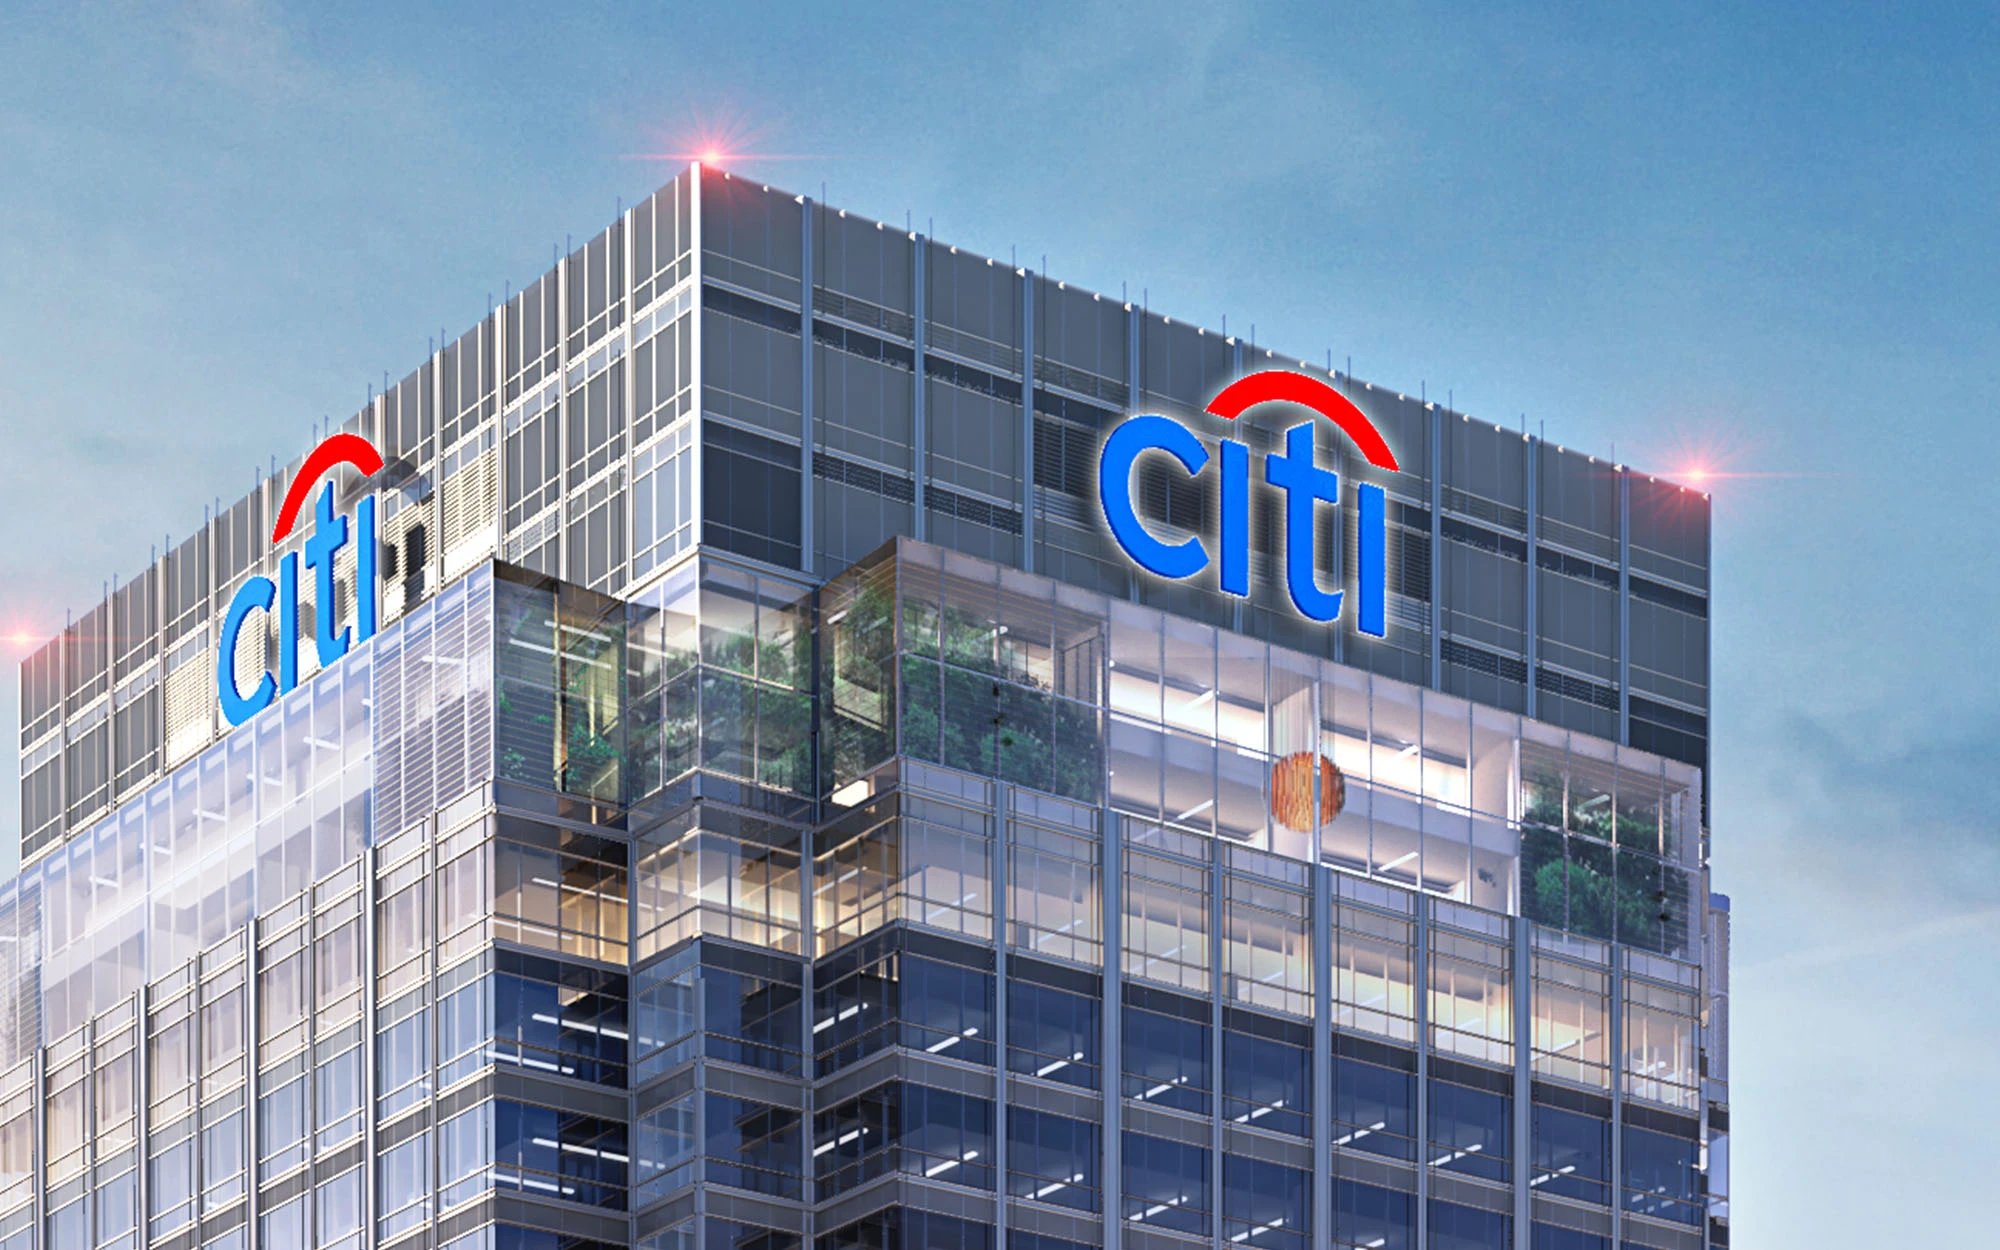 Detail Render of Citi Bank